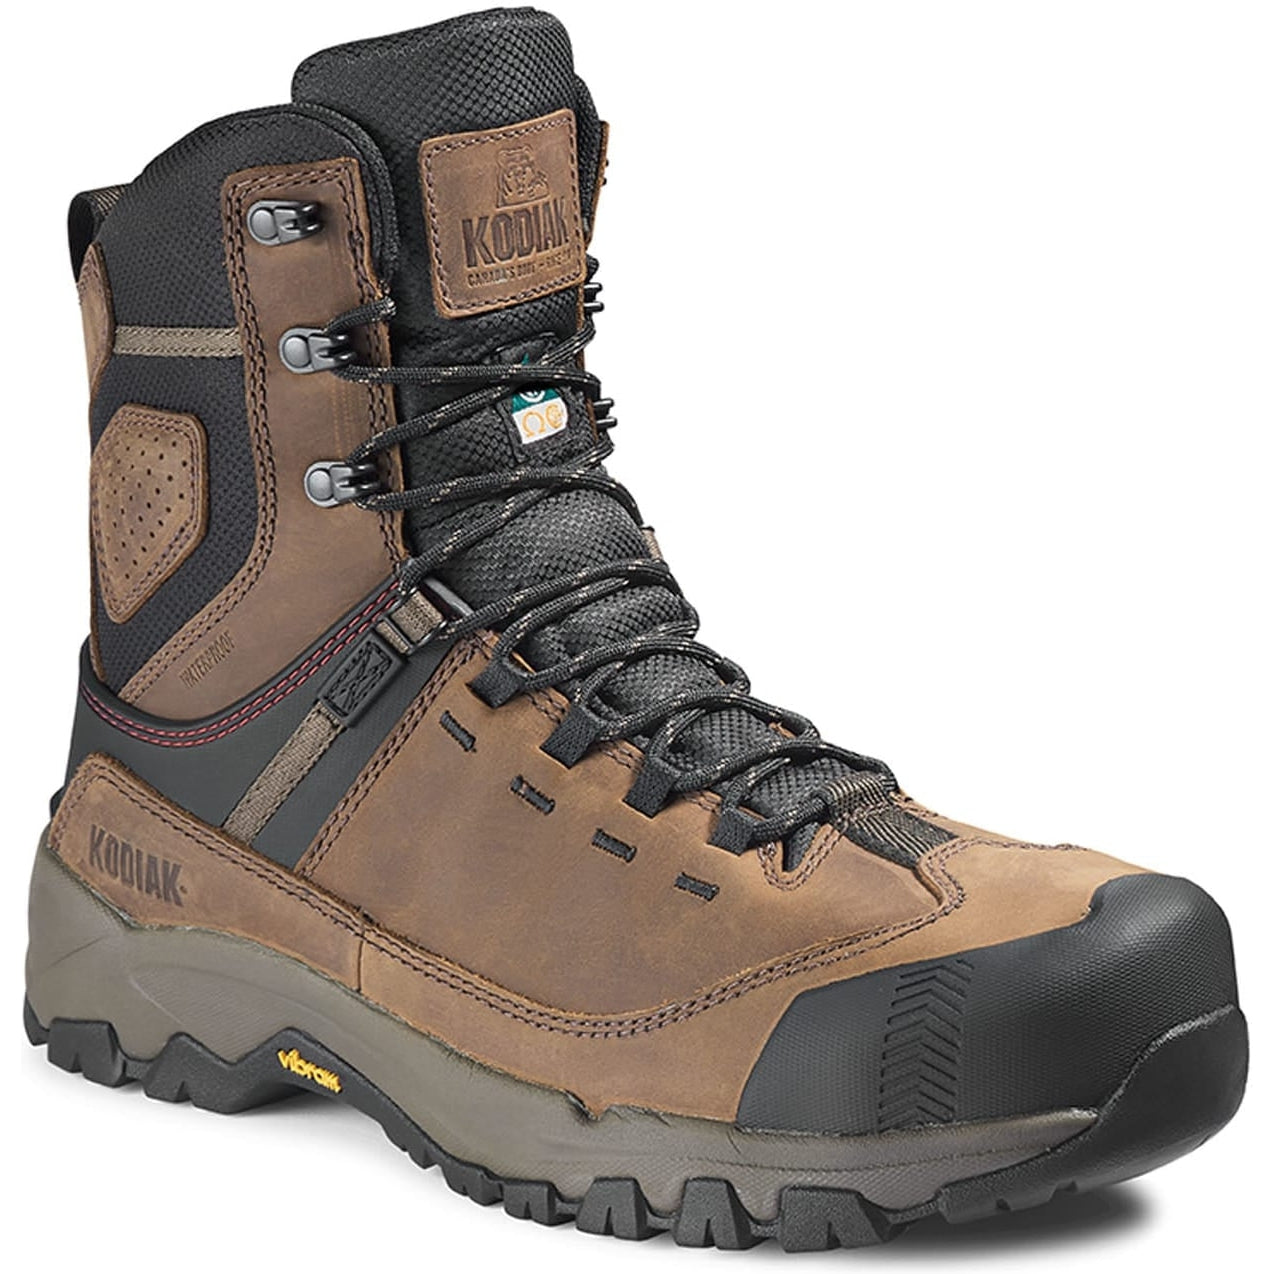 Kodiak Men's Quest Bound 8" Comp Toe WP Safety Work Boot -Brown- 4THHBN 7 / Wide / Brown - Overlook Boots